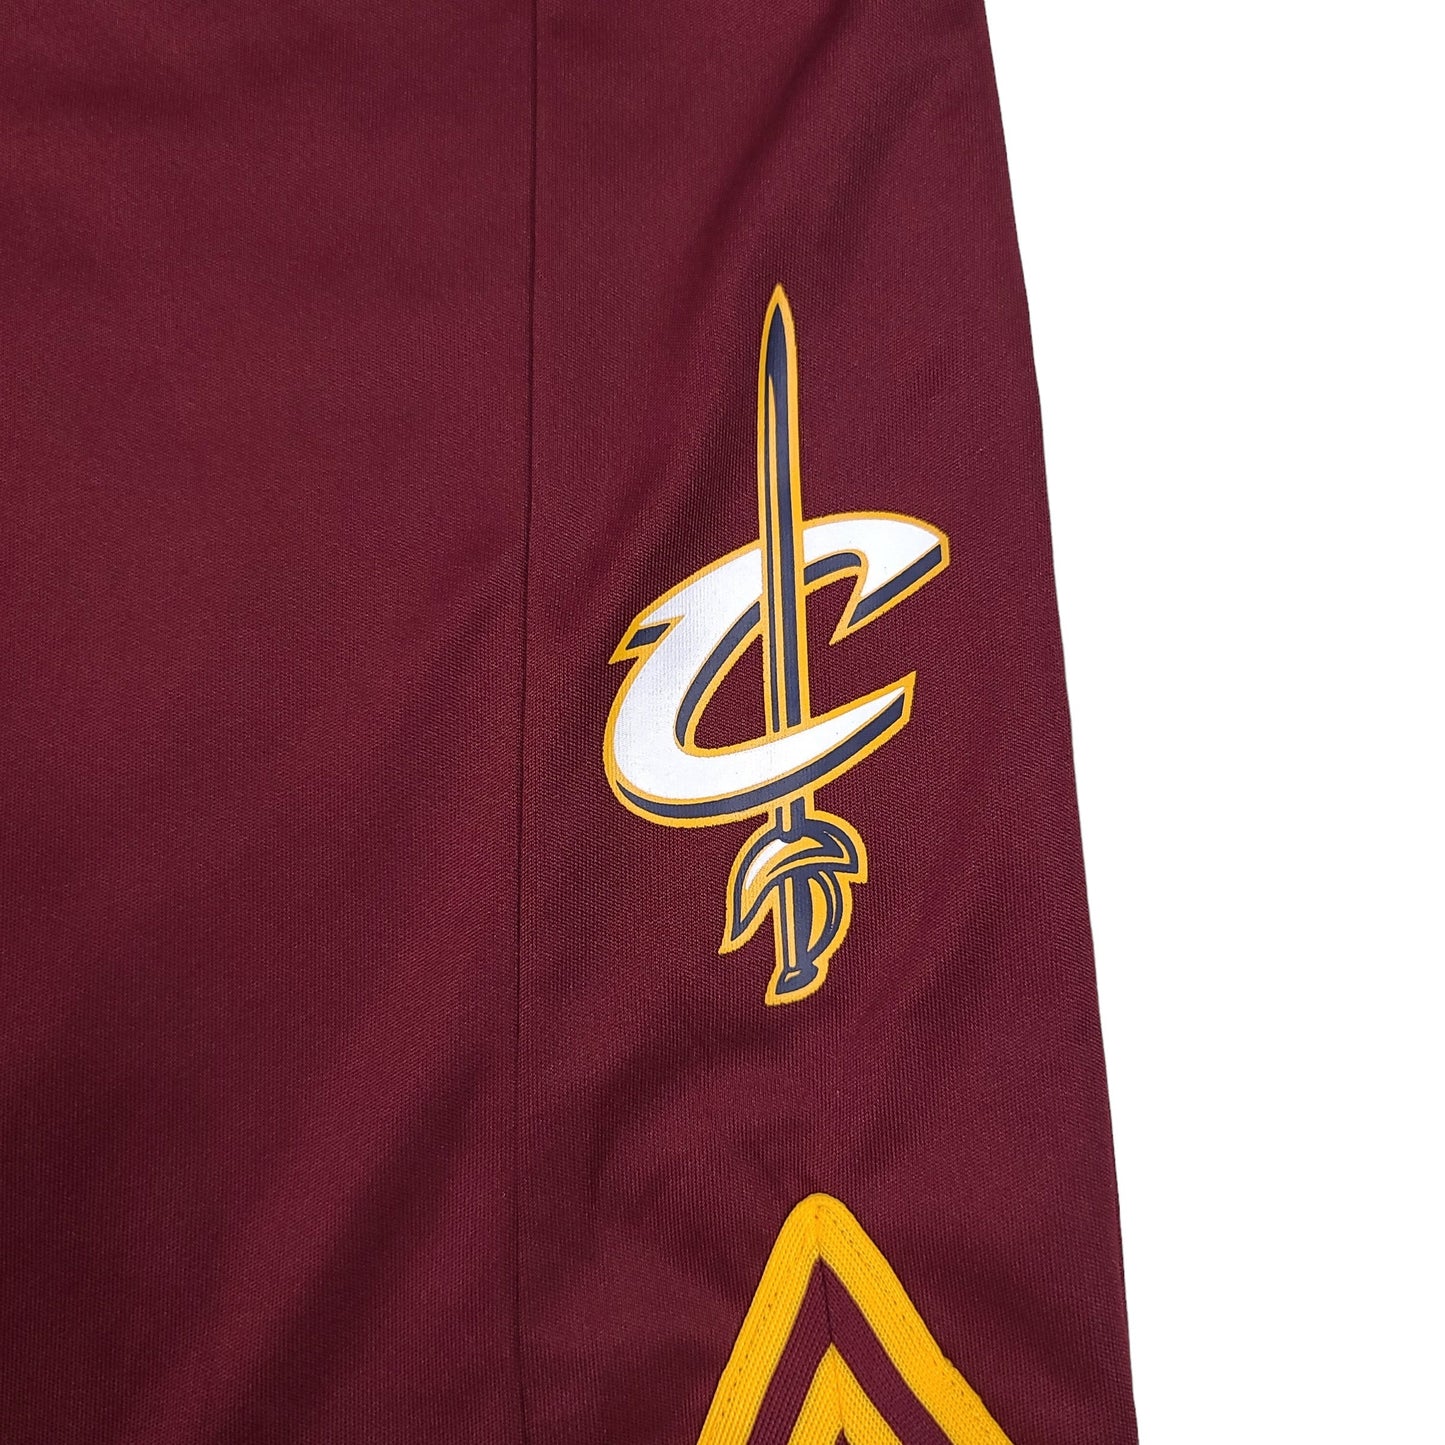 Cleveland Cavaliers Maroon & Gold adidas Basketball Shorts